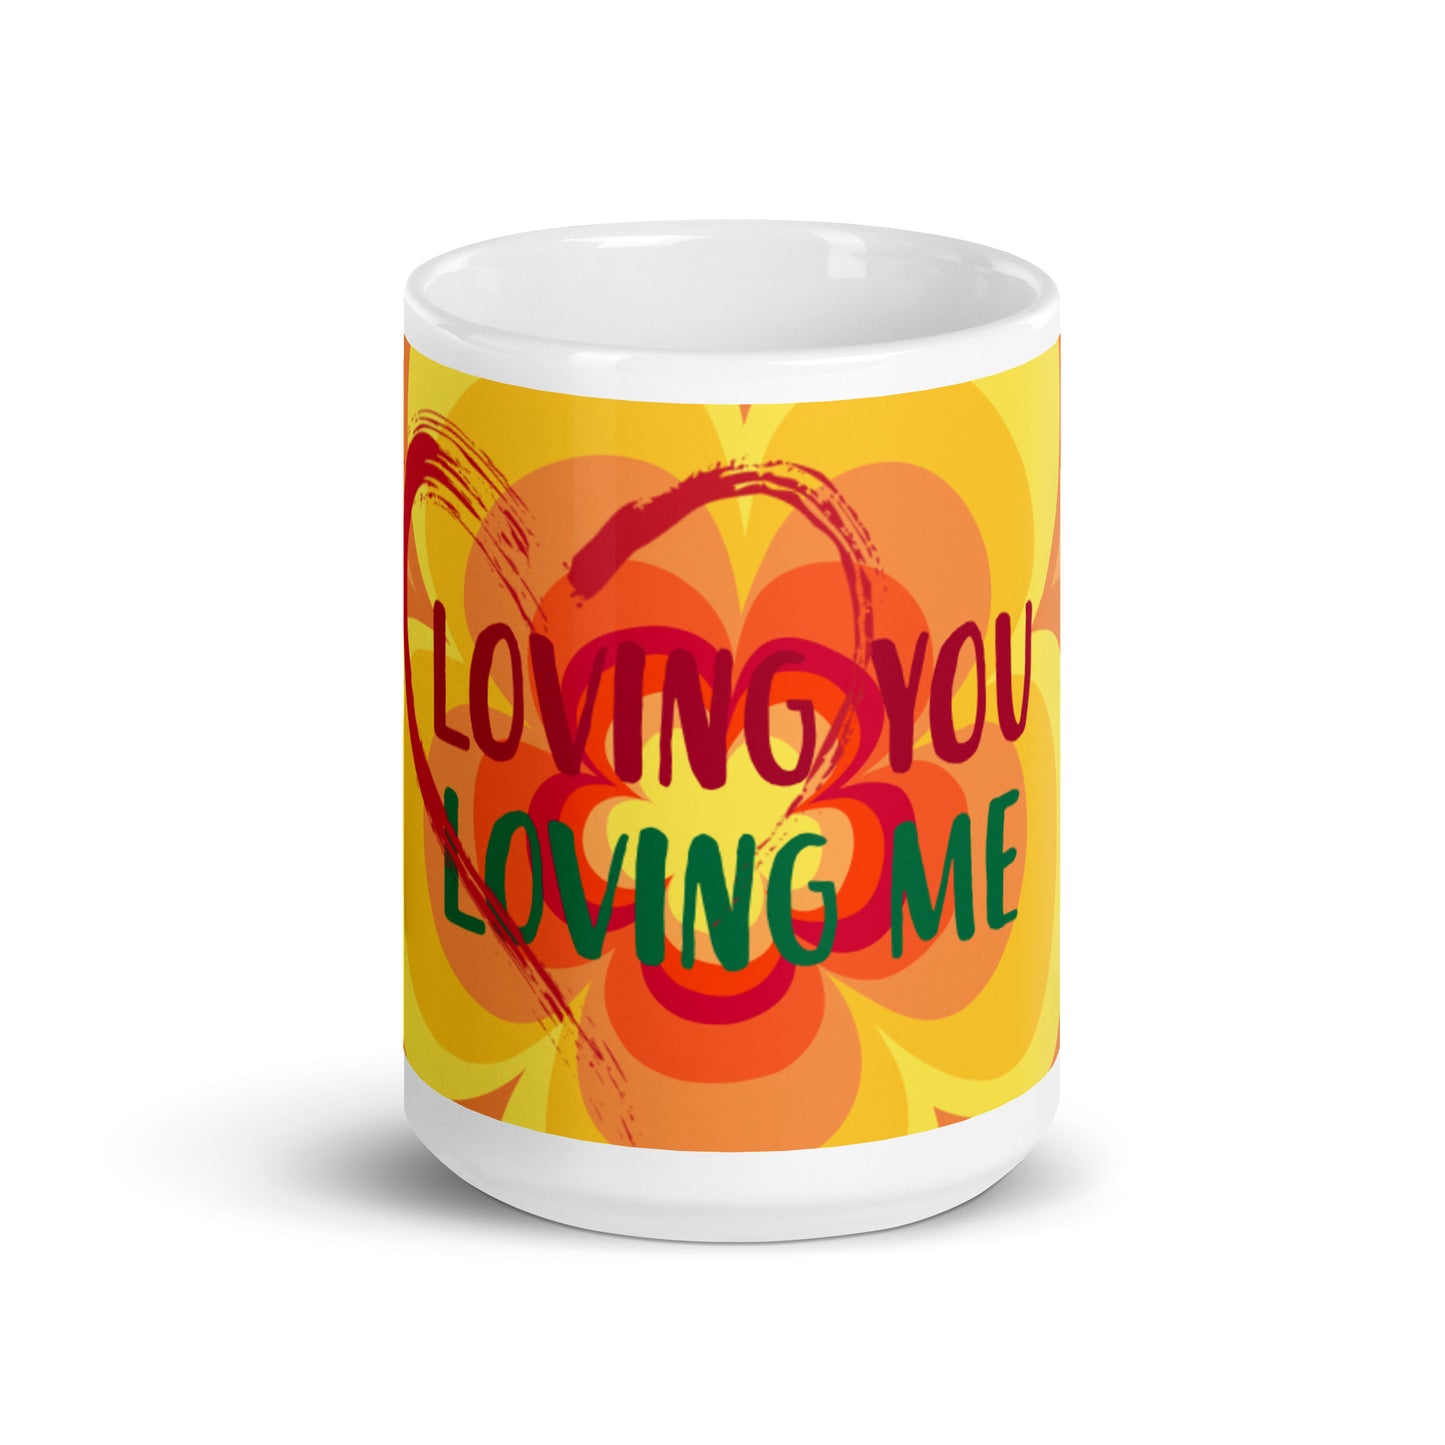 Sunny Flower 2 White Glossy Mug - Loving you Loving me